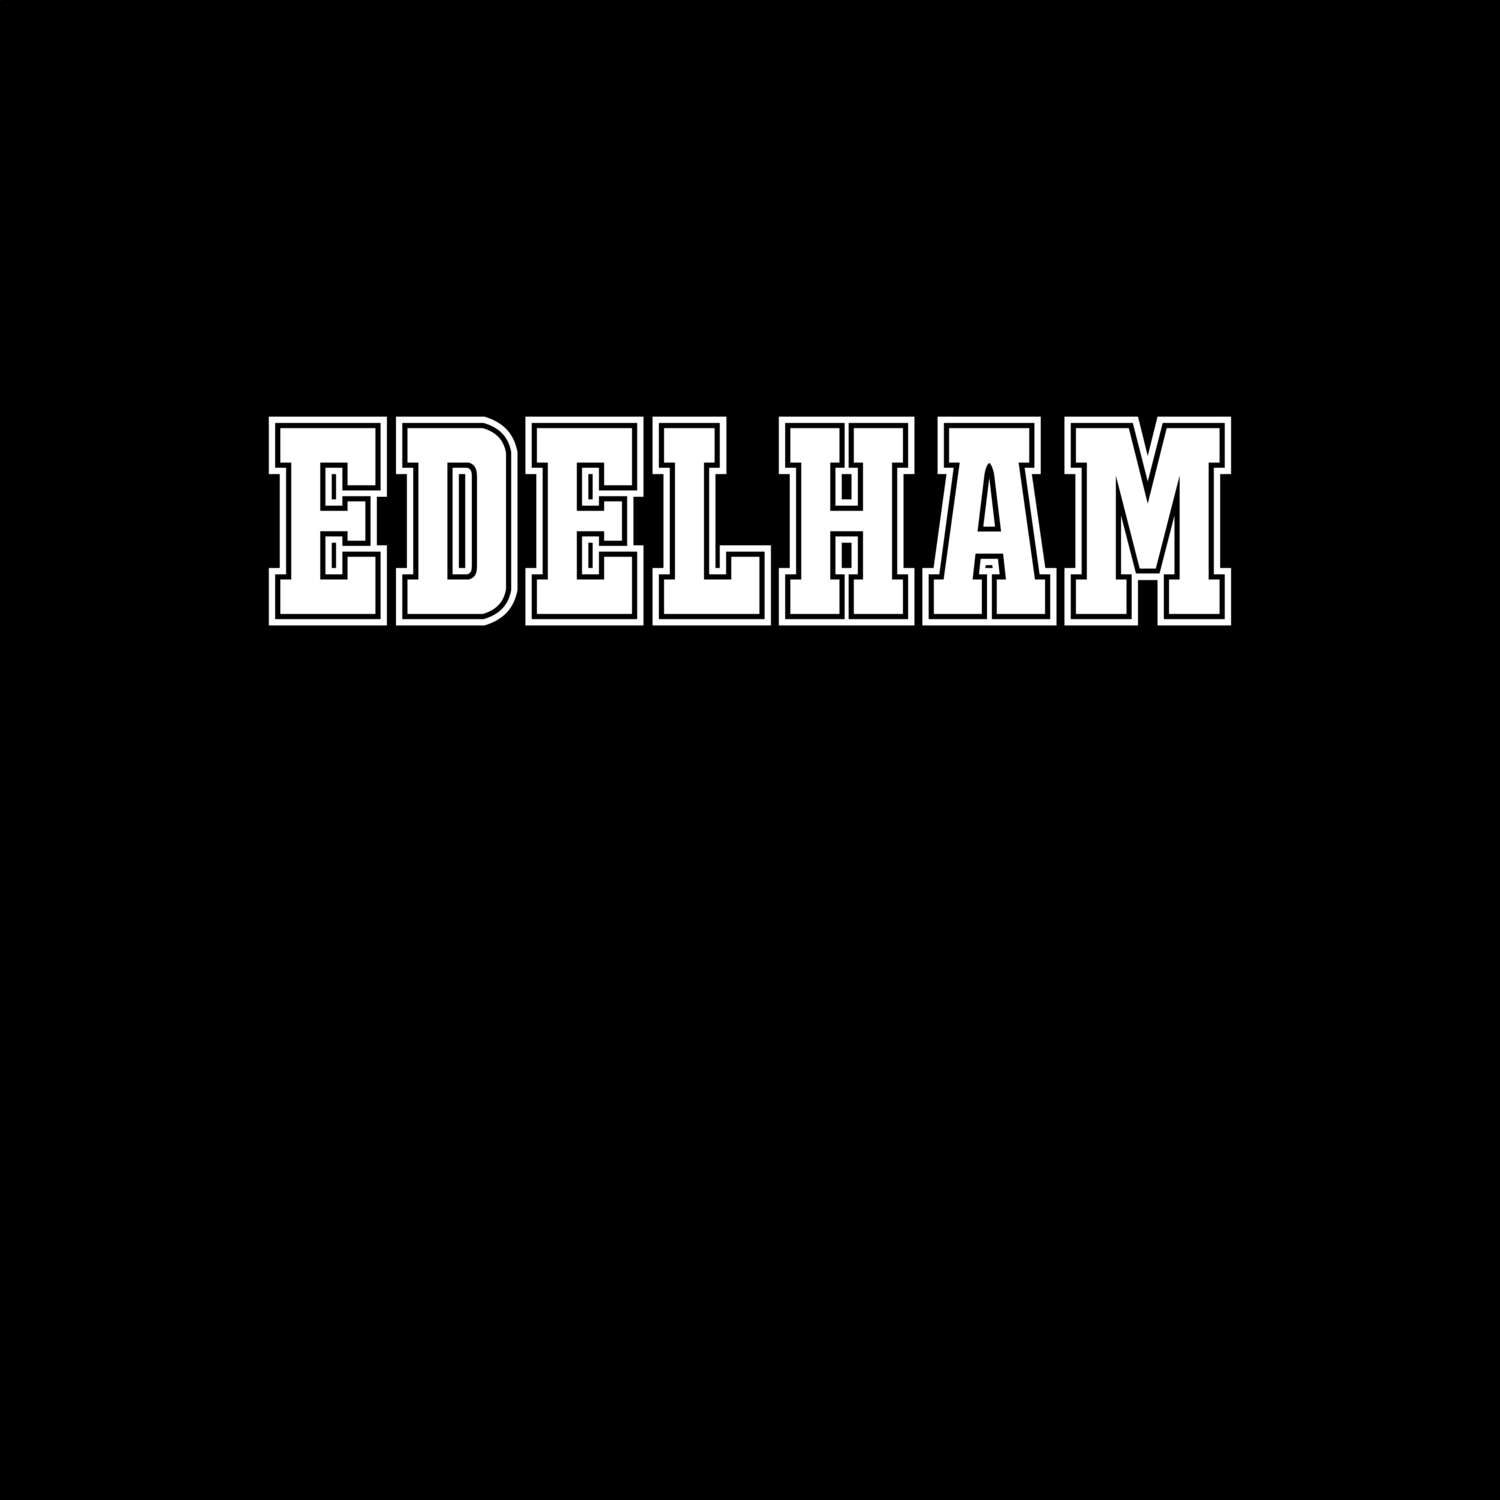 Edelham T-Shirt »Classic«